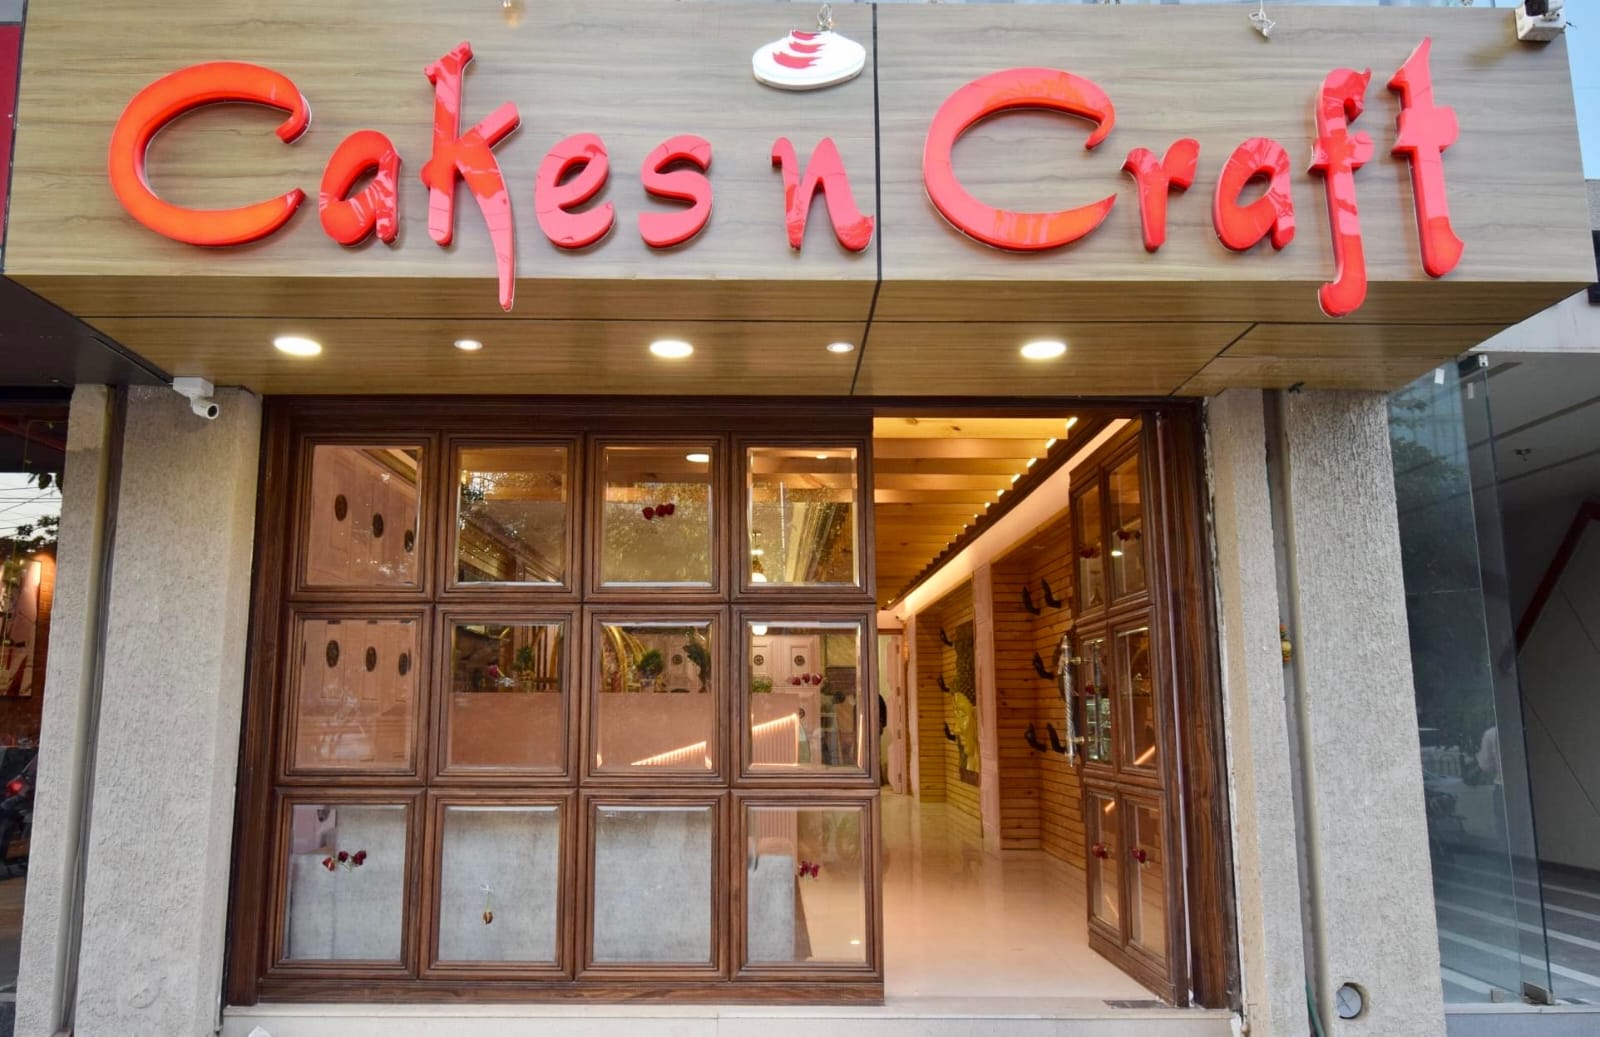 Update more than 130 cakes n craft menu latest - awesomeenglish.edu.vn